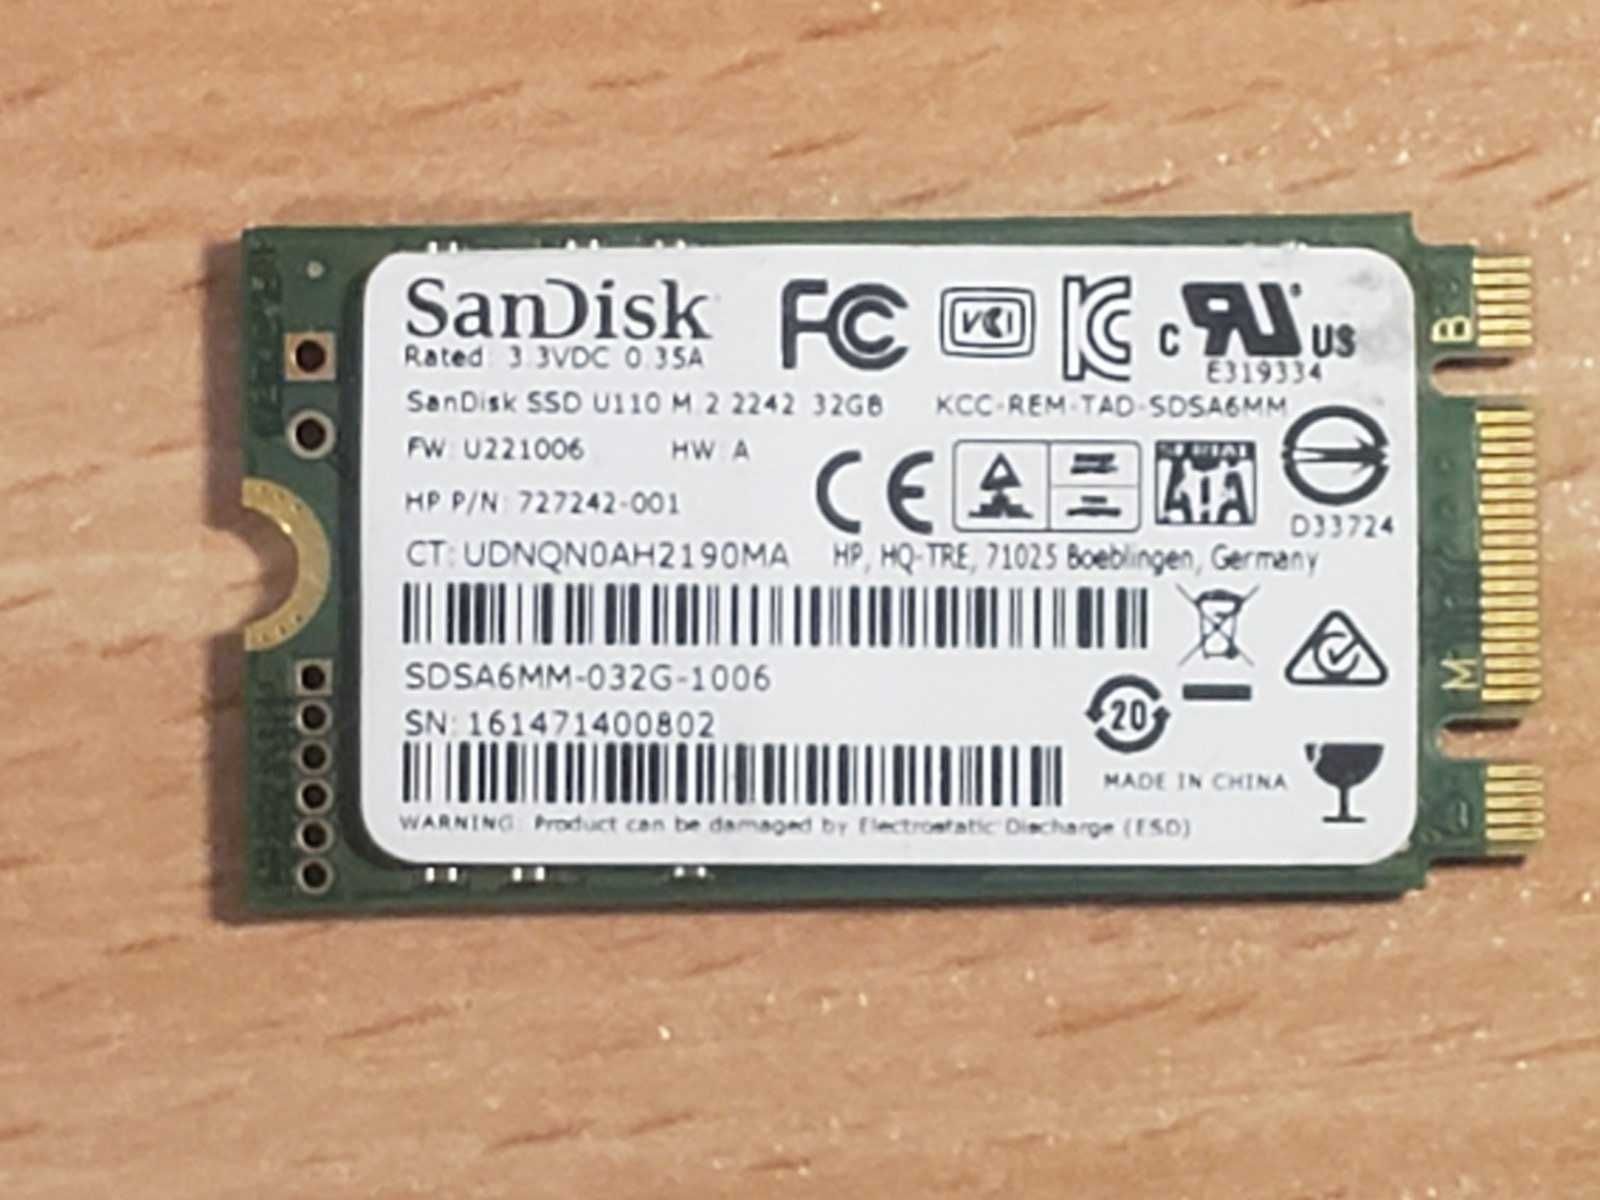 SSD 32gb SanDisk U110. 2242 m.2 sata mlc. хорошее состояние.